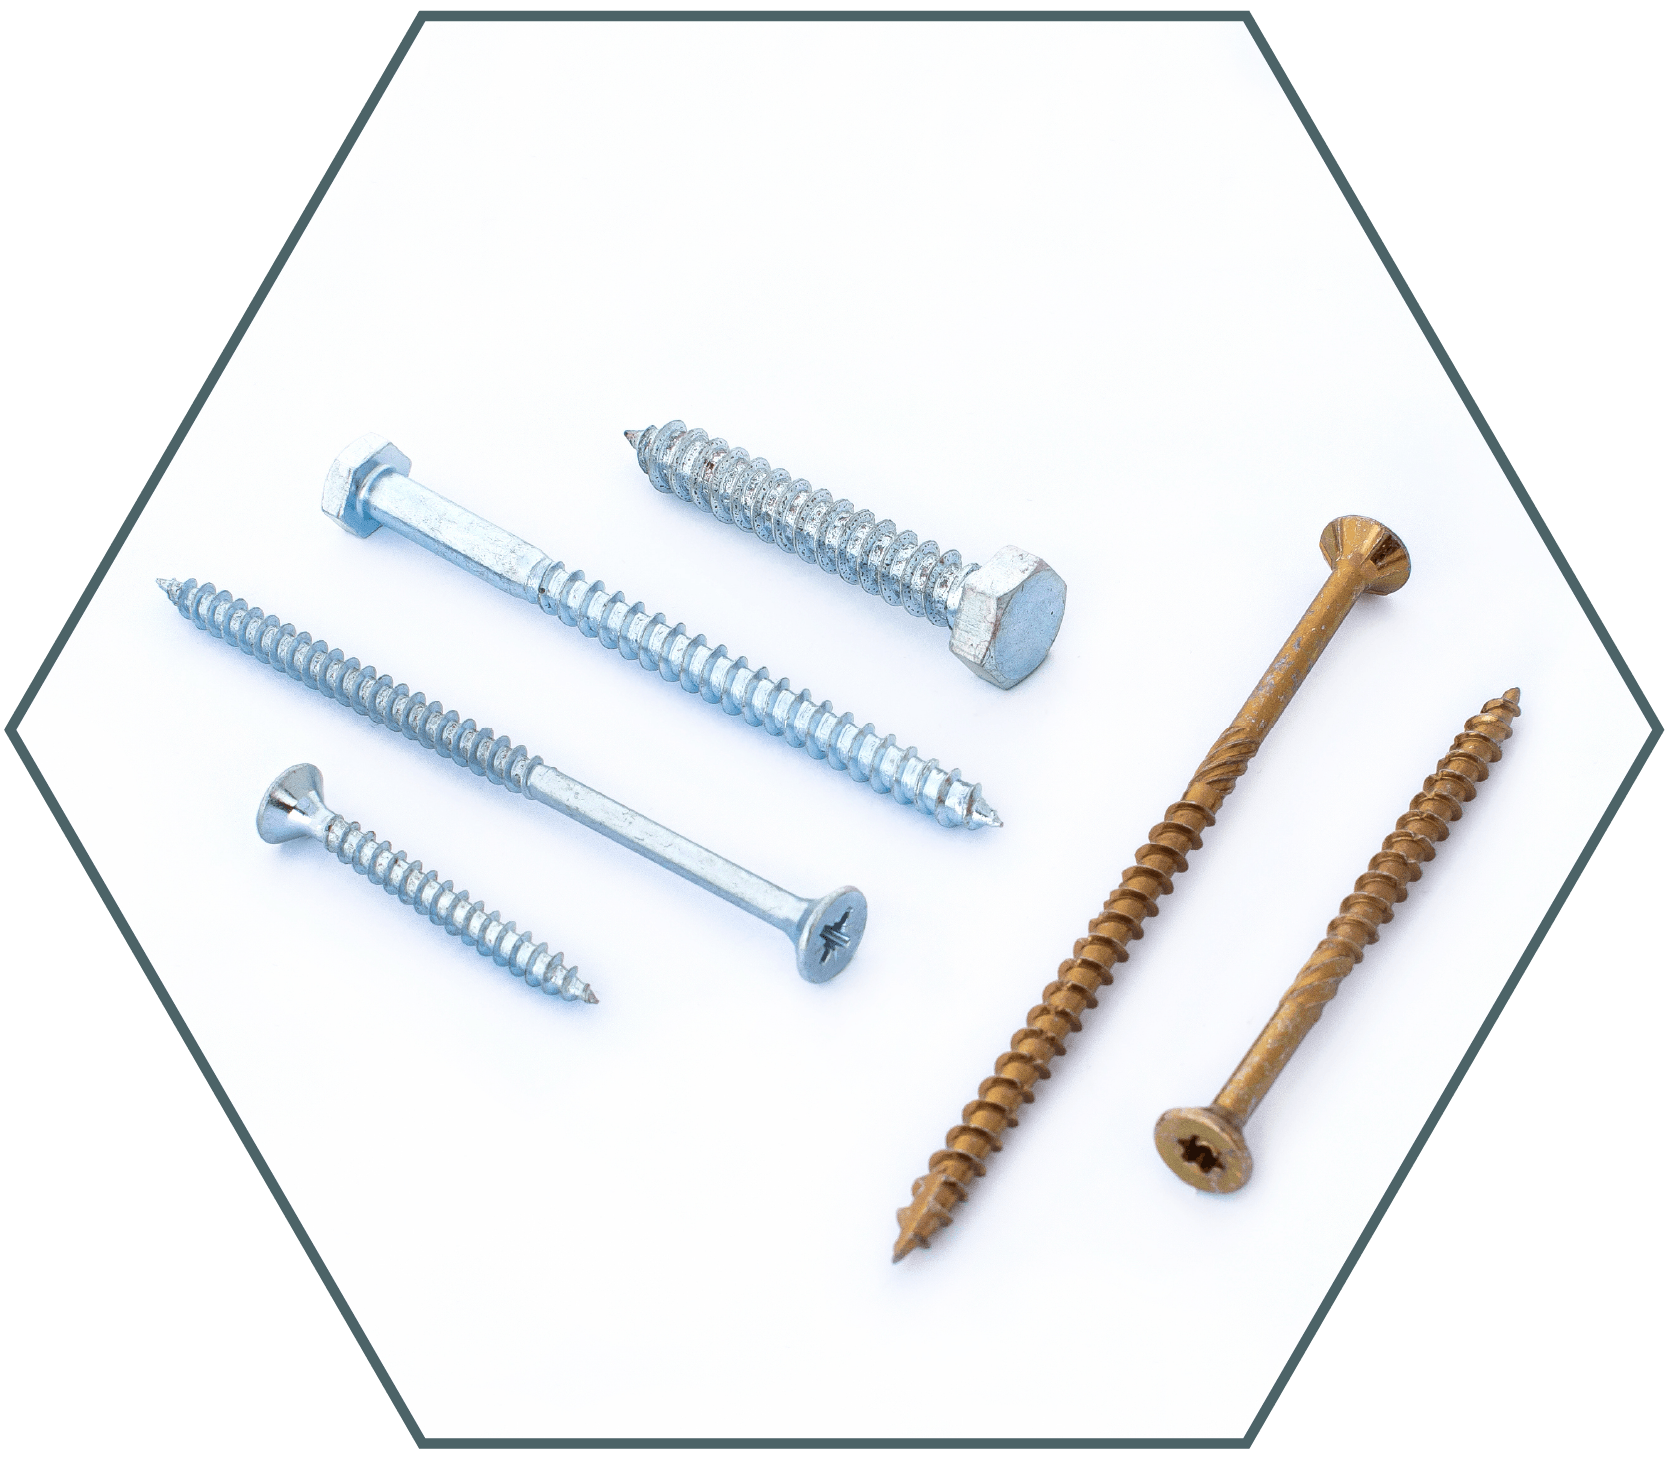 Technoplan - Fasteners specialists - Wood screws